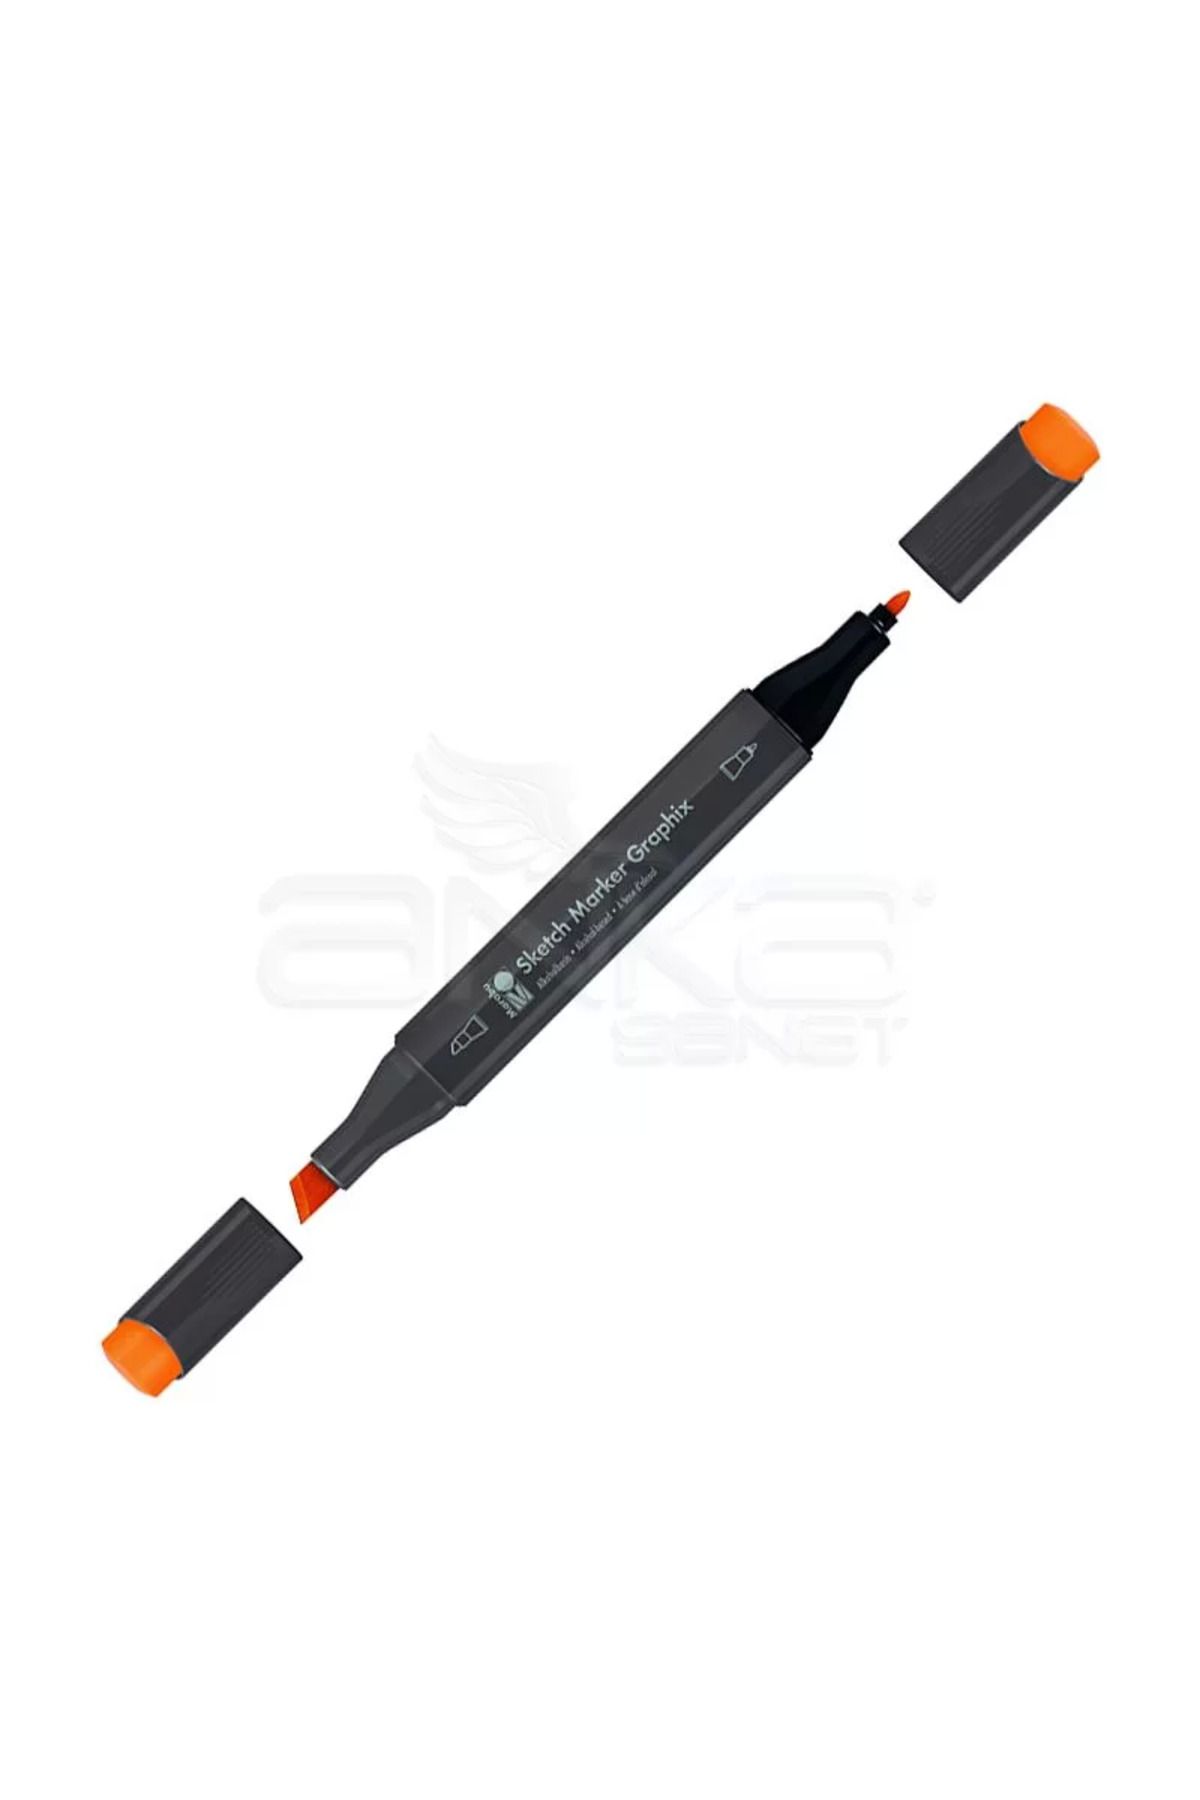 Marabu Graphix Sketch Marker Çift Uçlu Kalem 925 Brilliant Orange